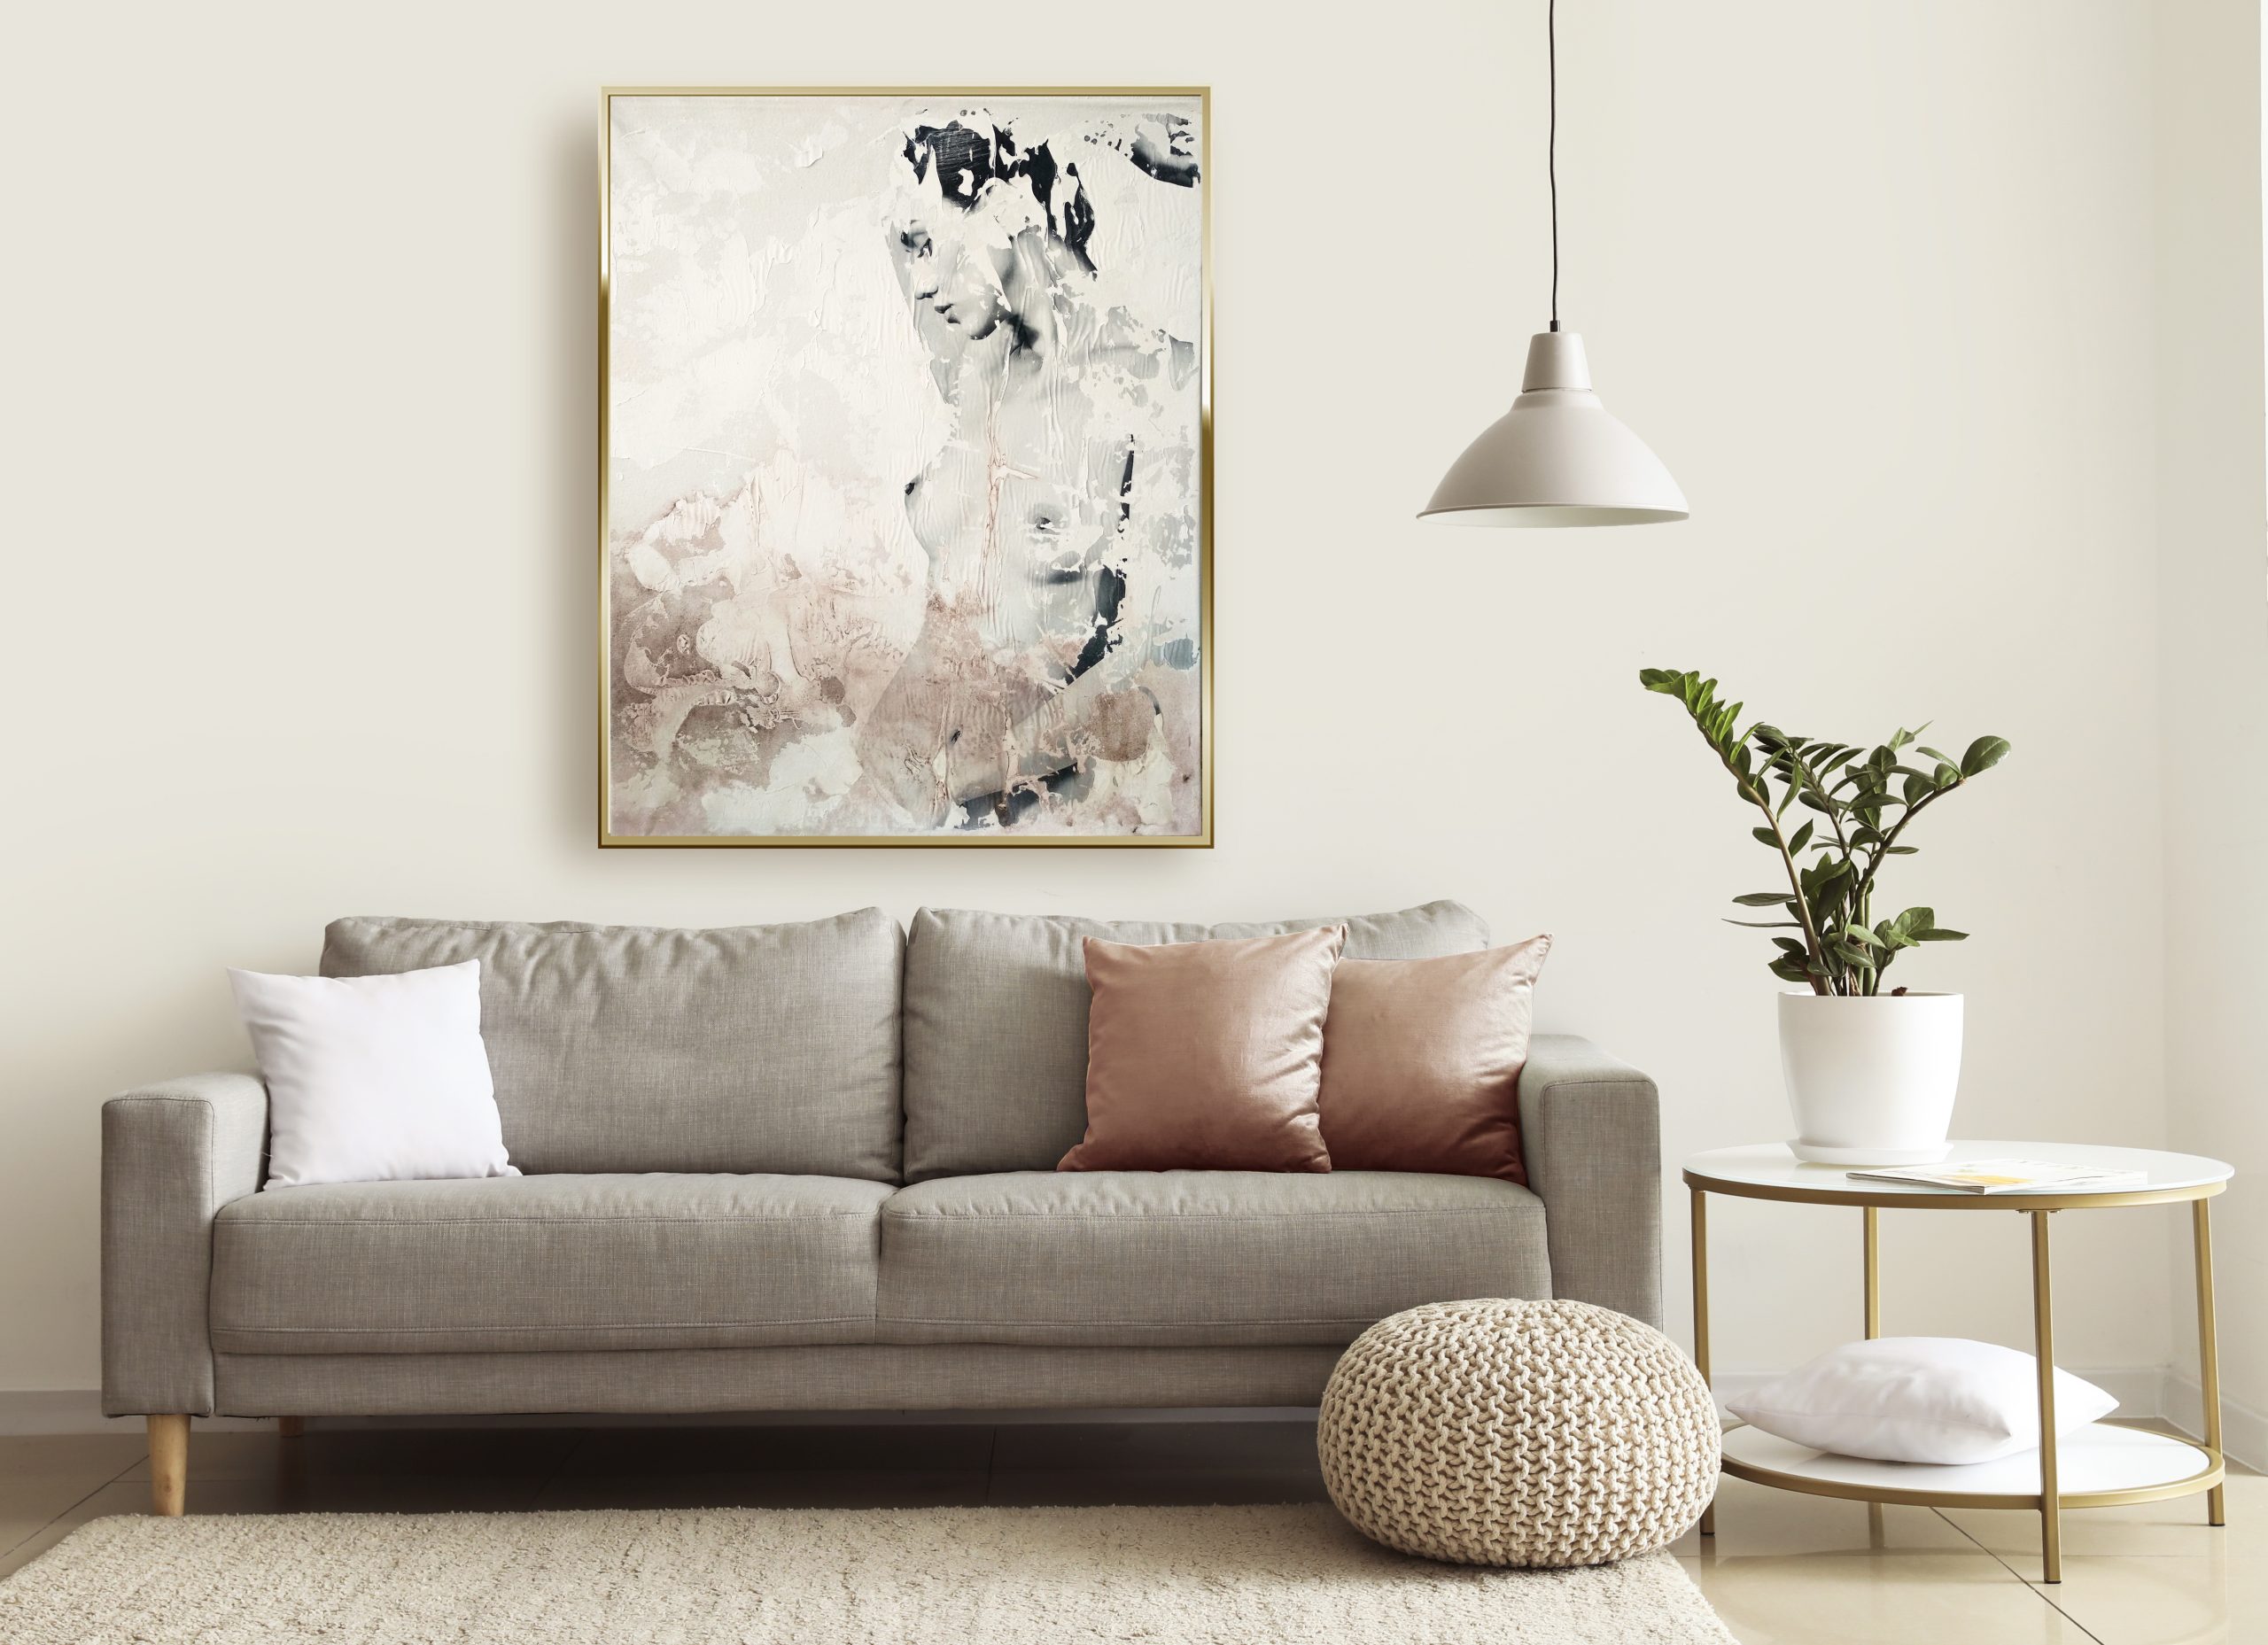 Sin titulo Raúl Lara figurative painting in Interior of modern room with comfortable sofa